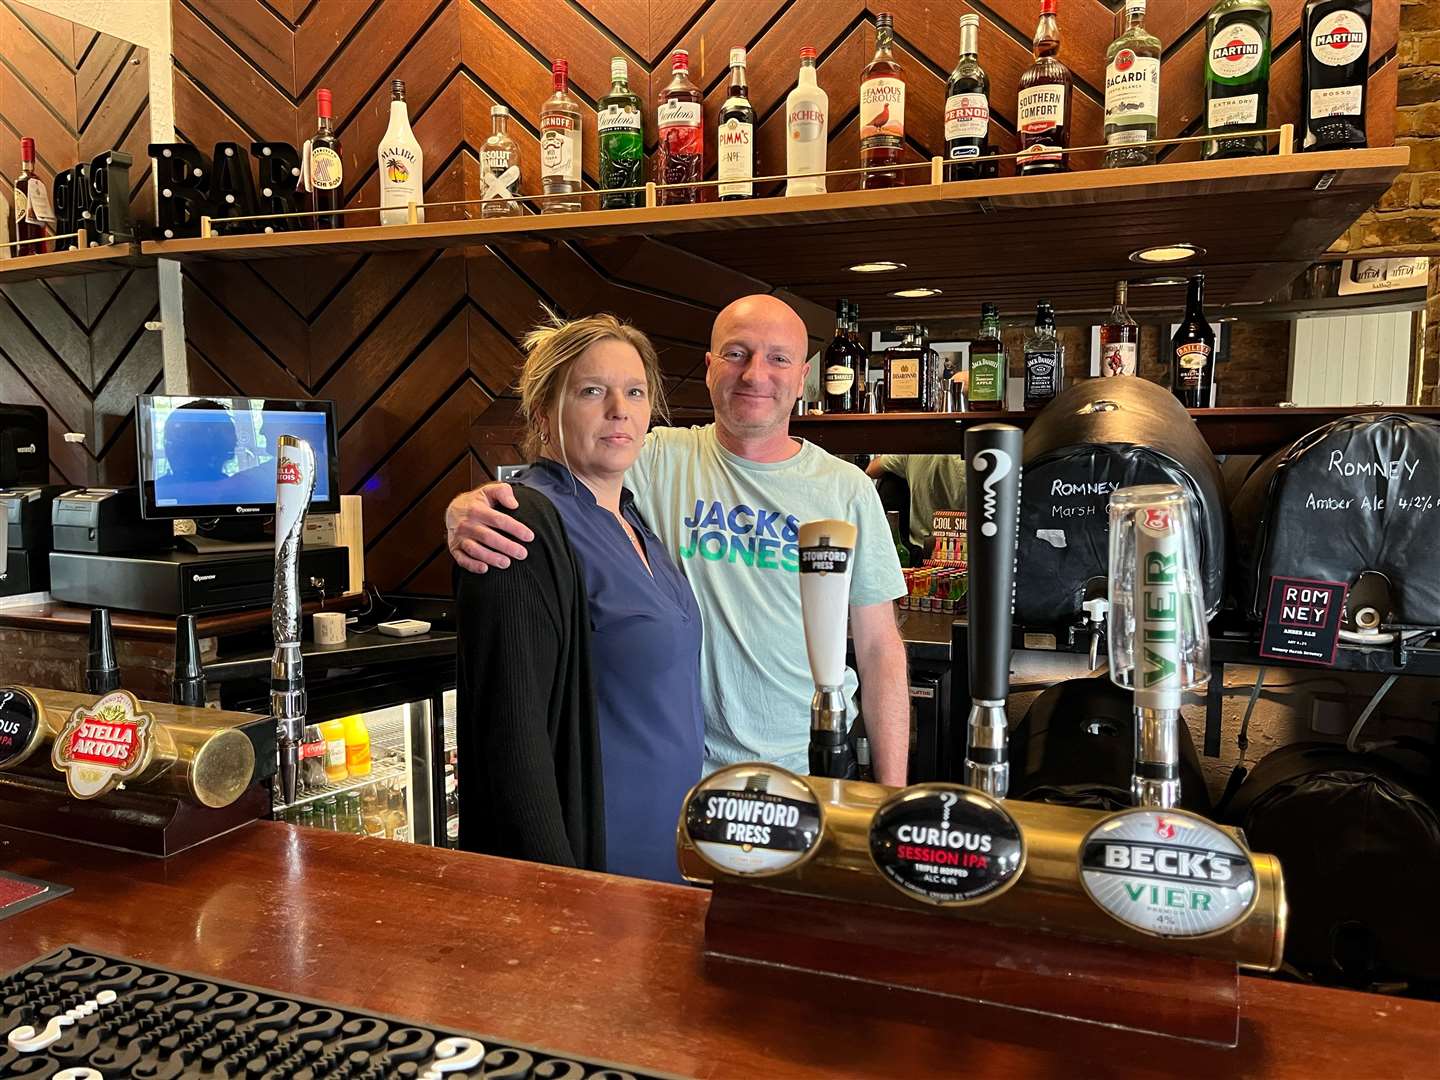 Paula Gilbert and Steve McHugh say custom has dwindled at the Chequers Inn in Petham